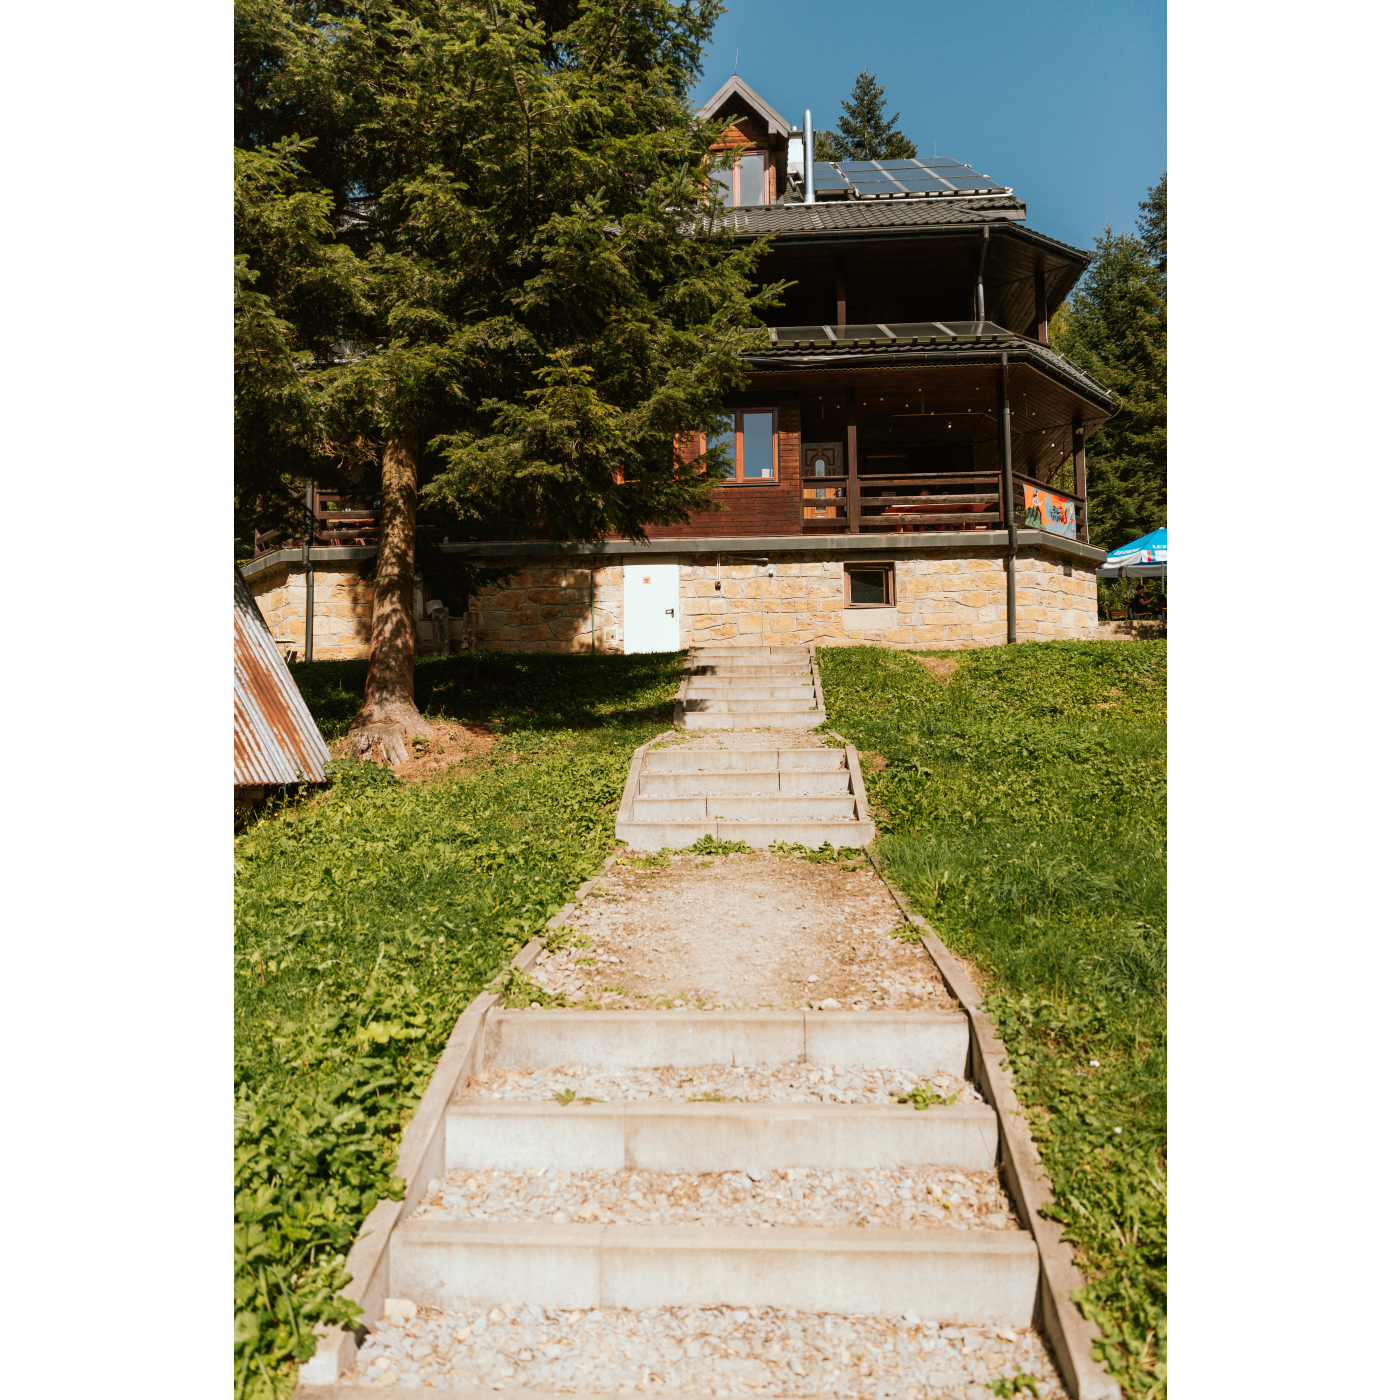 PTTK Forest Villa - accommodation and restaurant